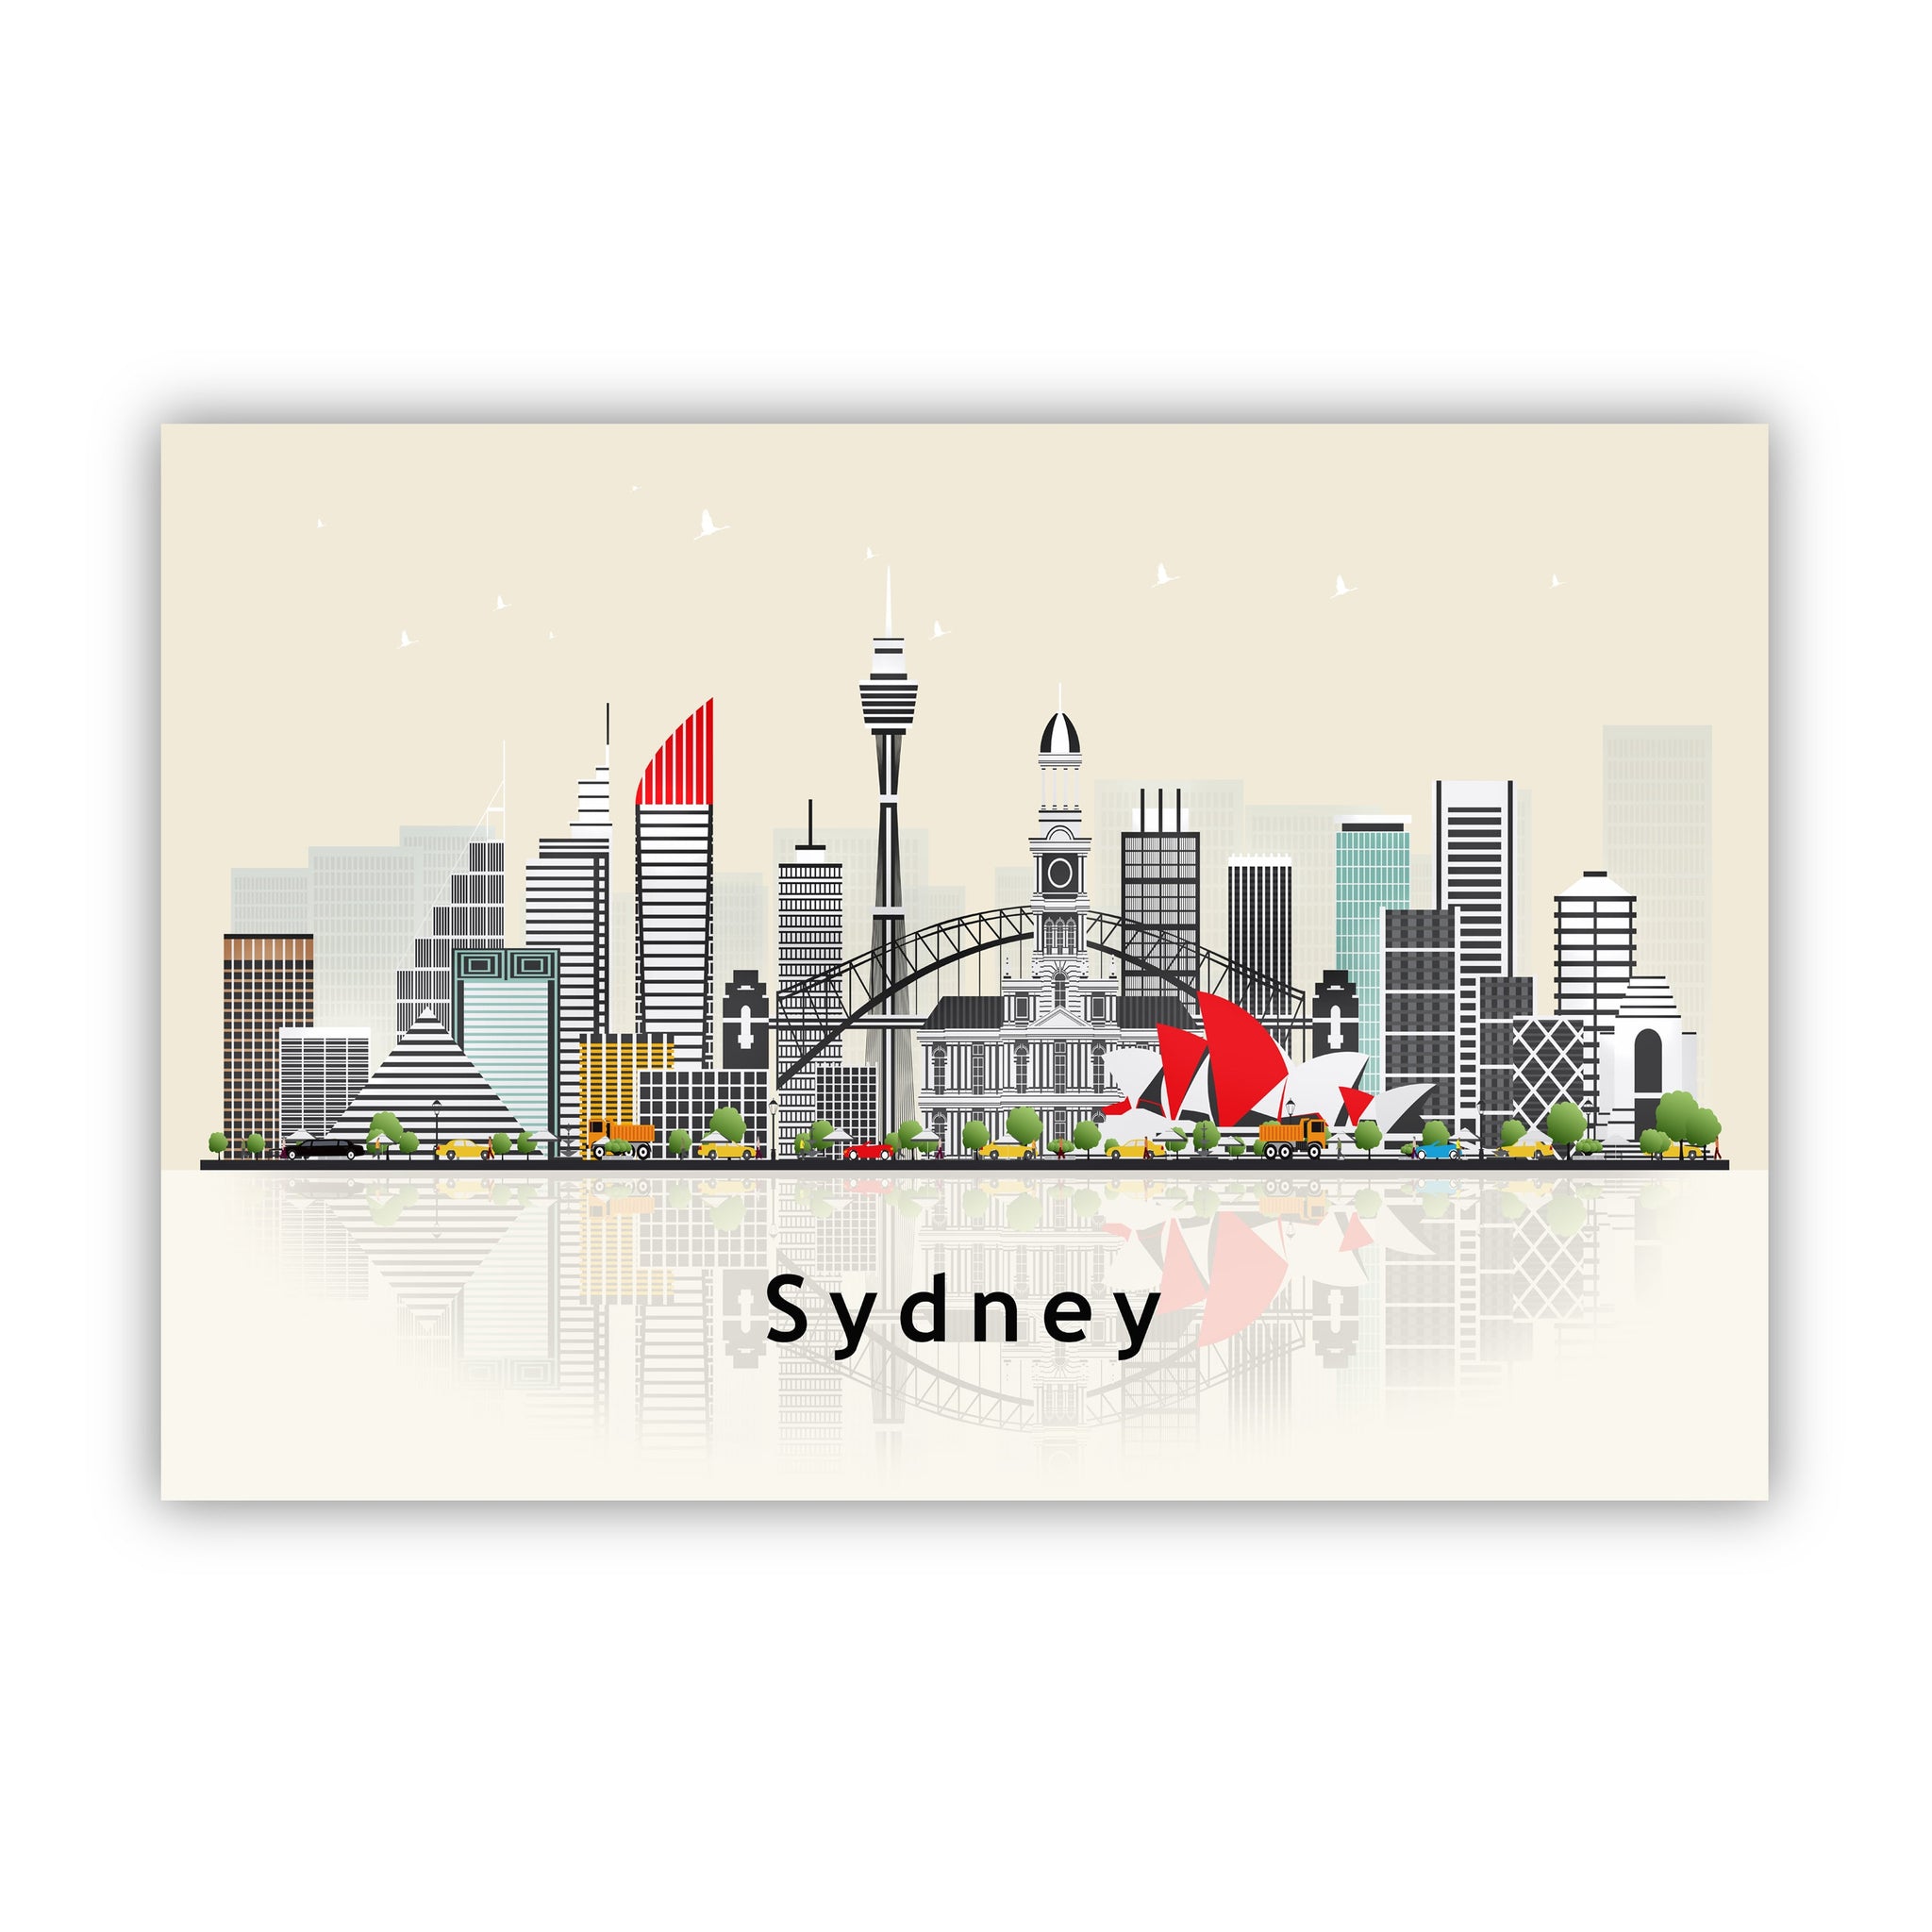 SYDNEY AUSTRALIA Illustration skyline poster, Modern skyline cityscape poster, Sydney skyline landmark map poster, Home wall decorations